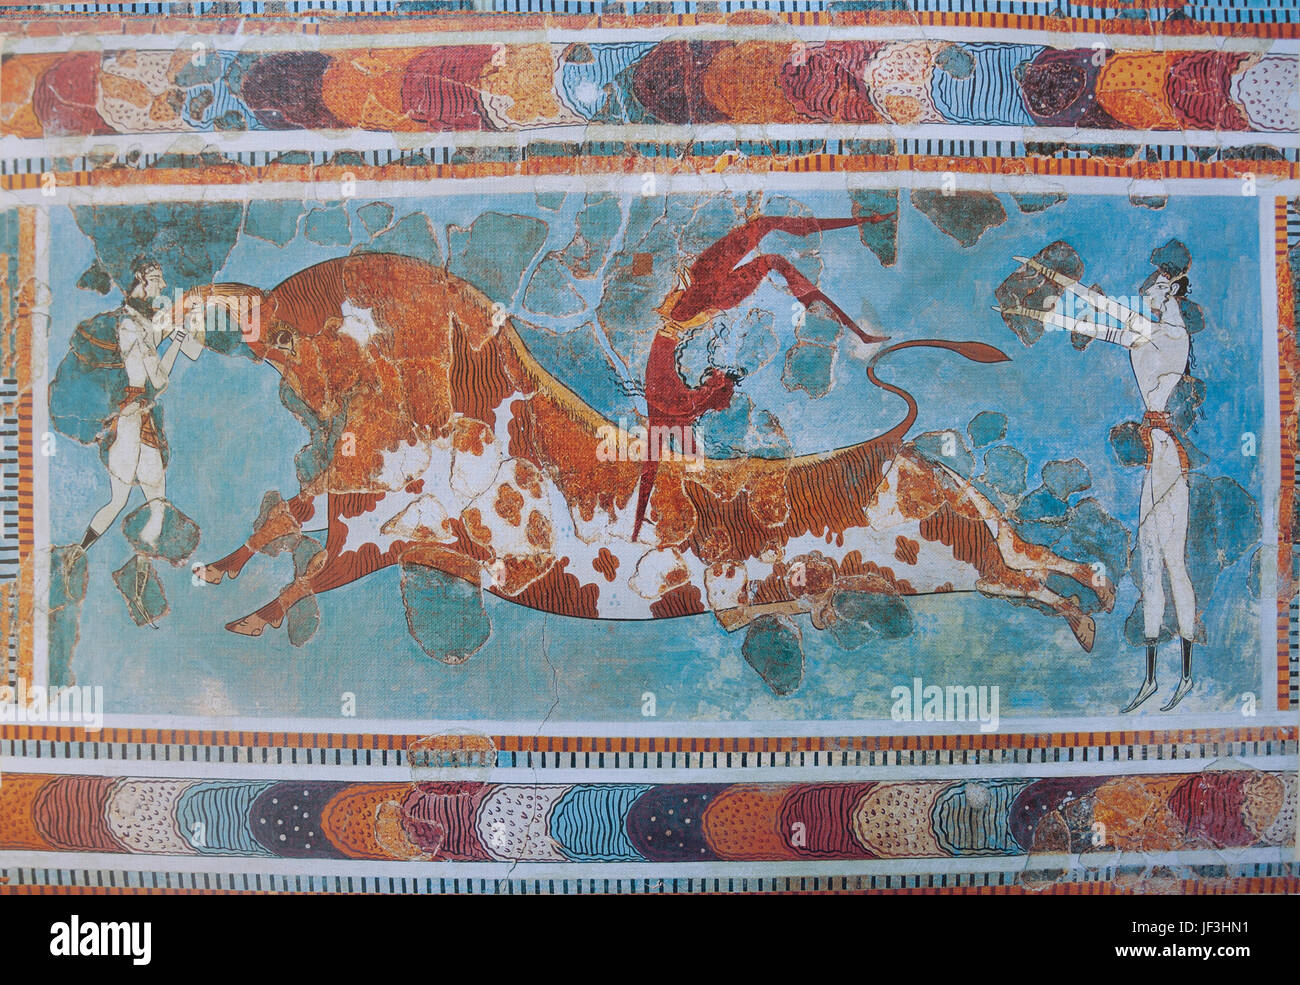 Bull-leaping fresco from Palace of Knossos (Knosos), Heraklion (Irakleio), Irakleio Region, Crete (Kriti), Greece Stock Photo